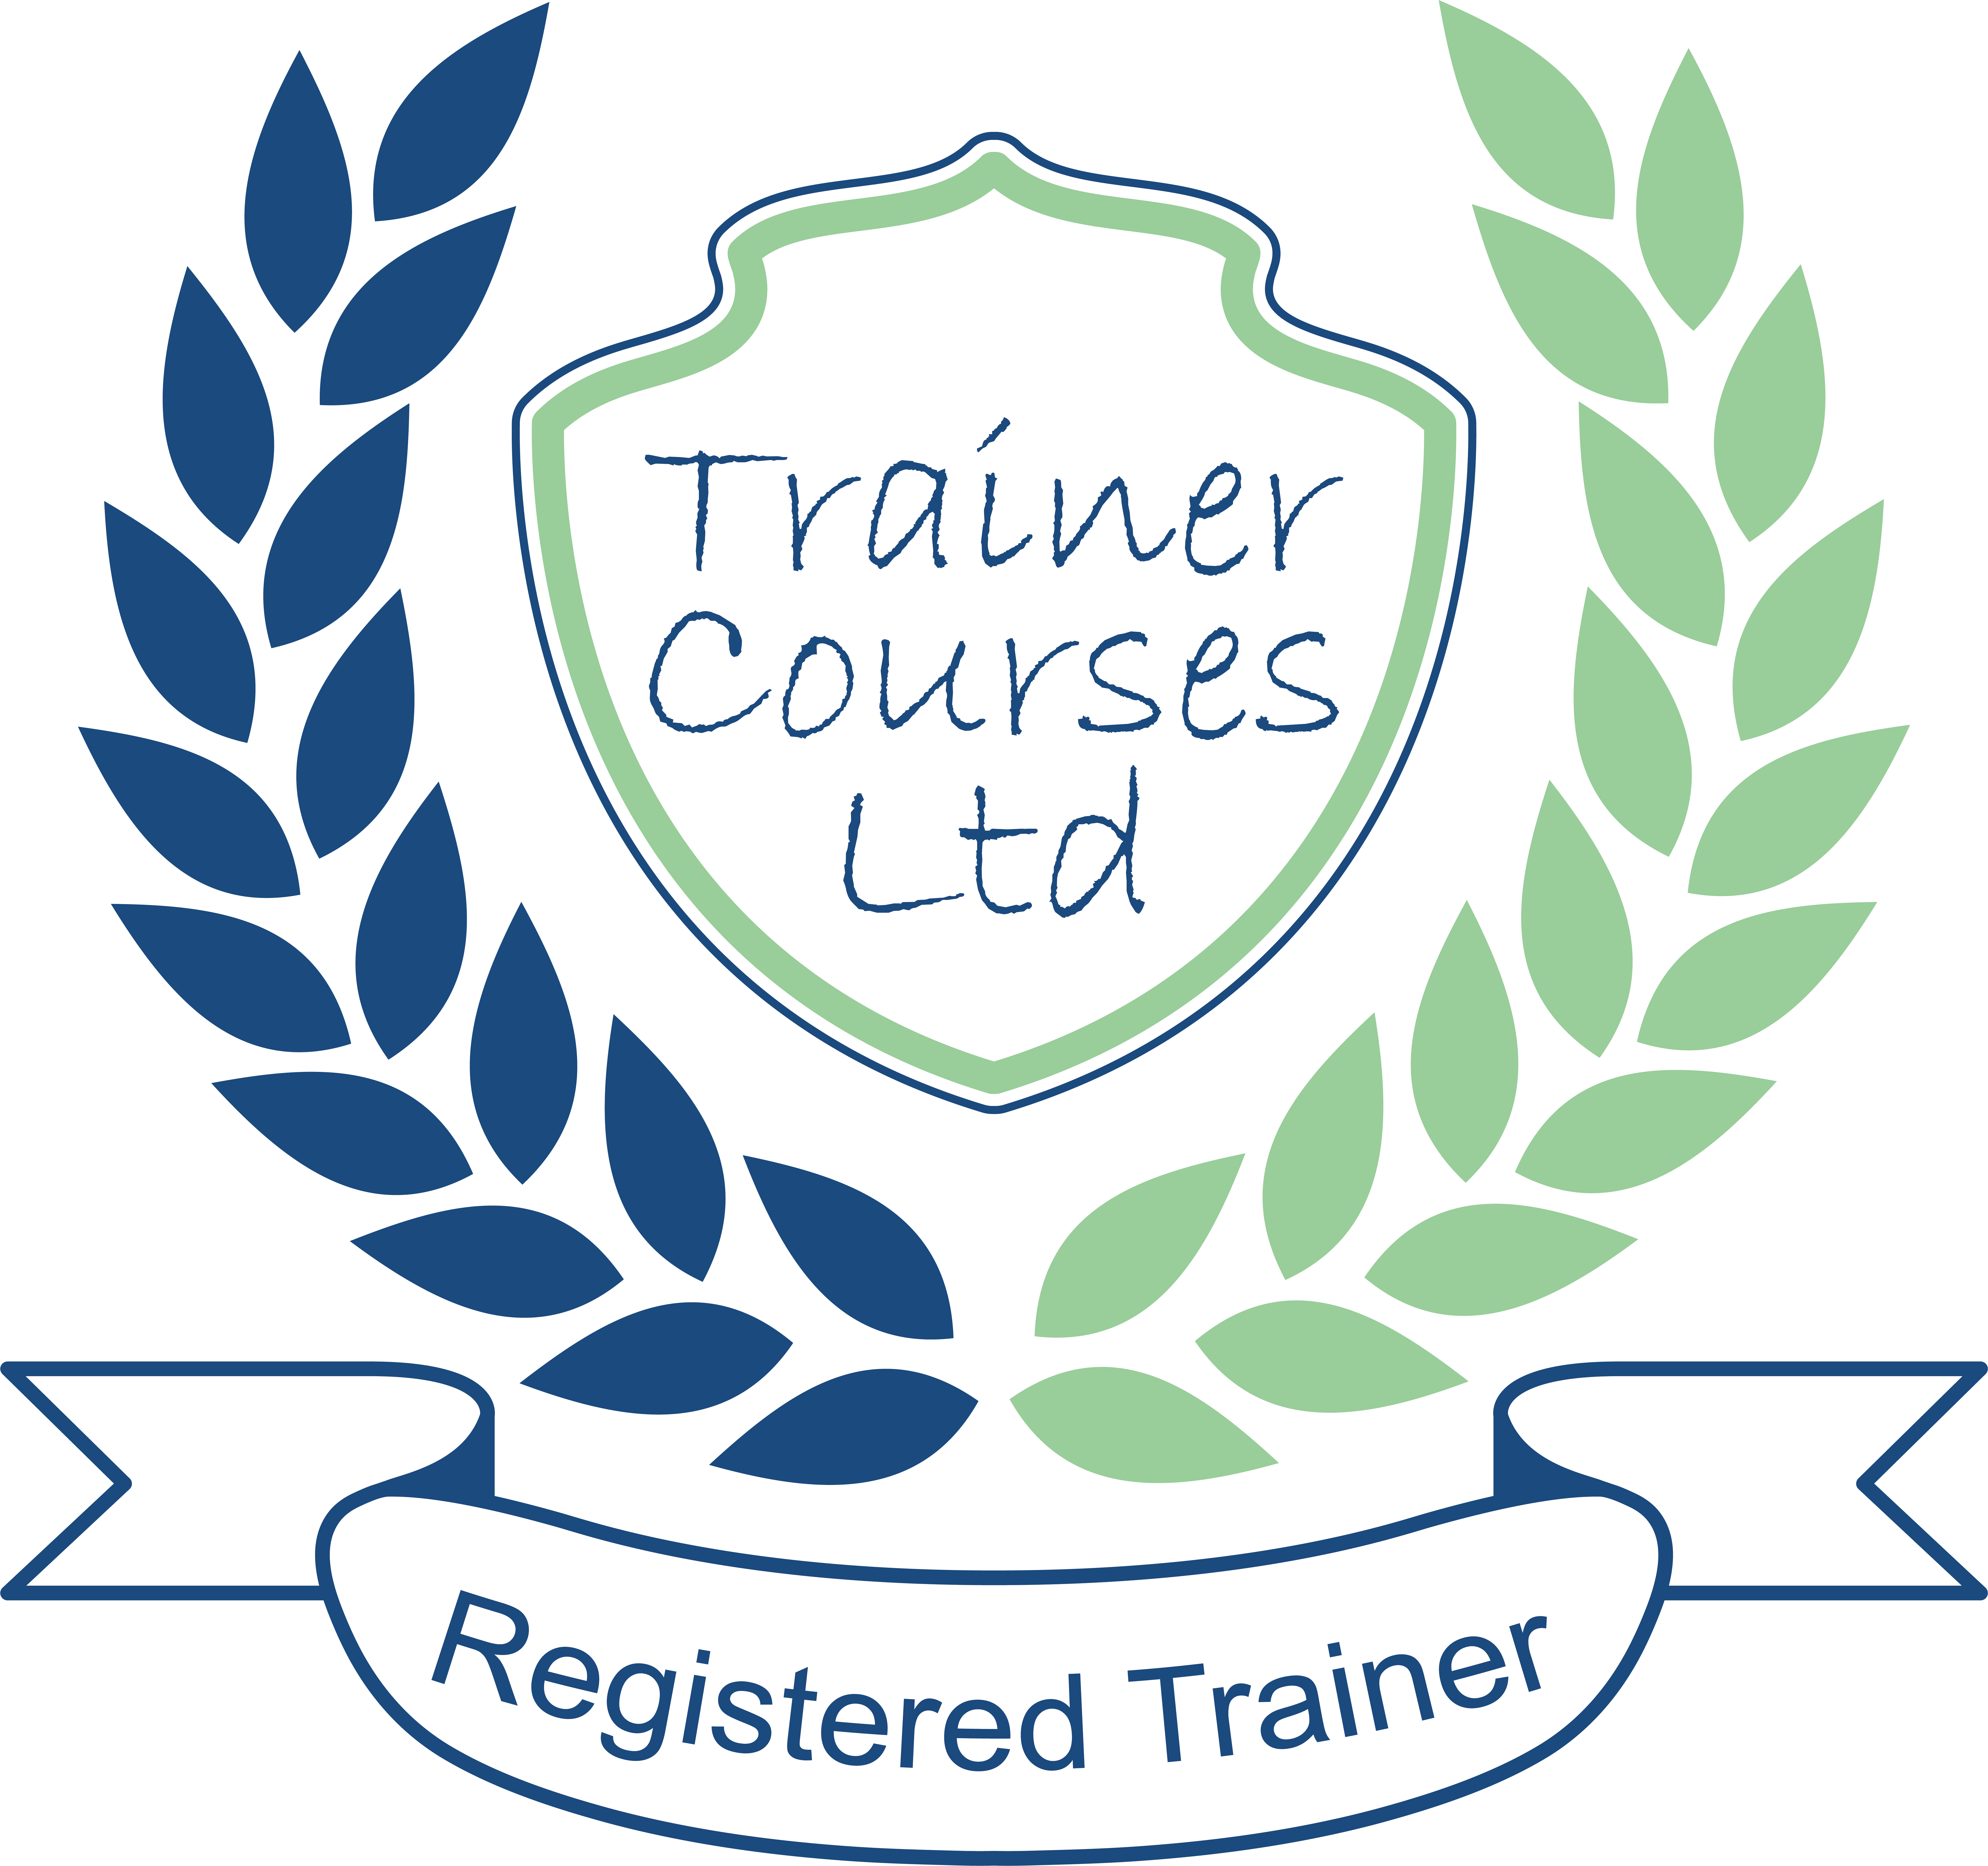 Trainer Courses LTD - Registered